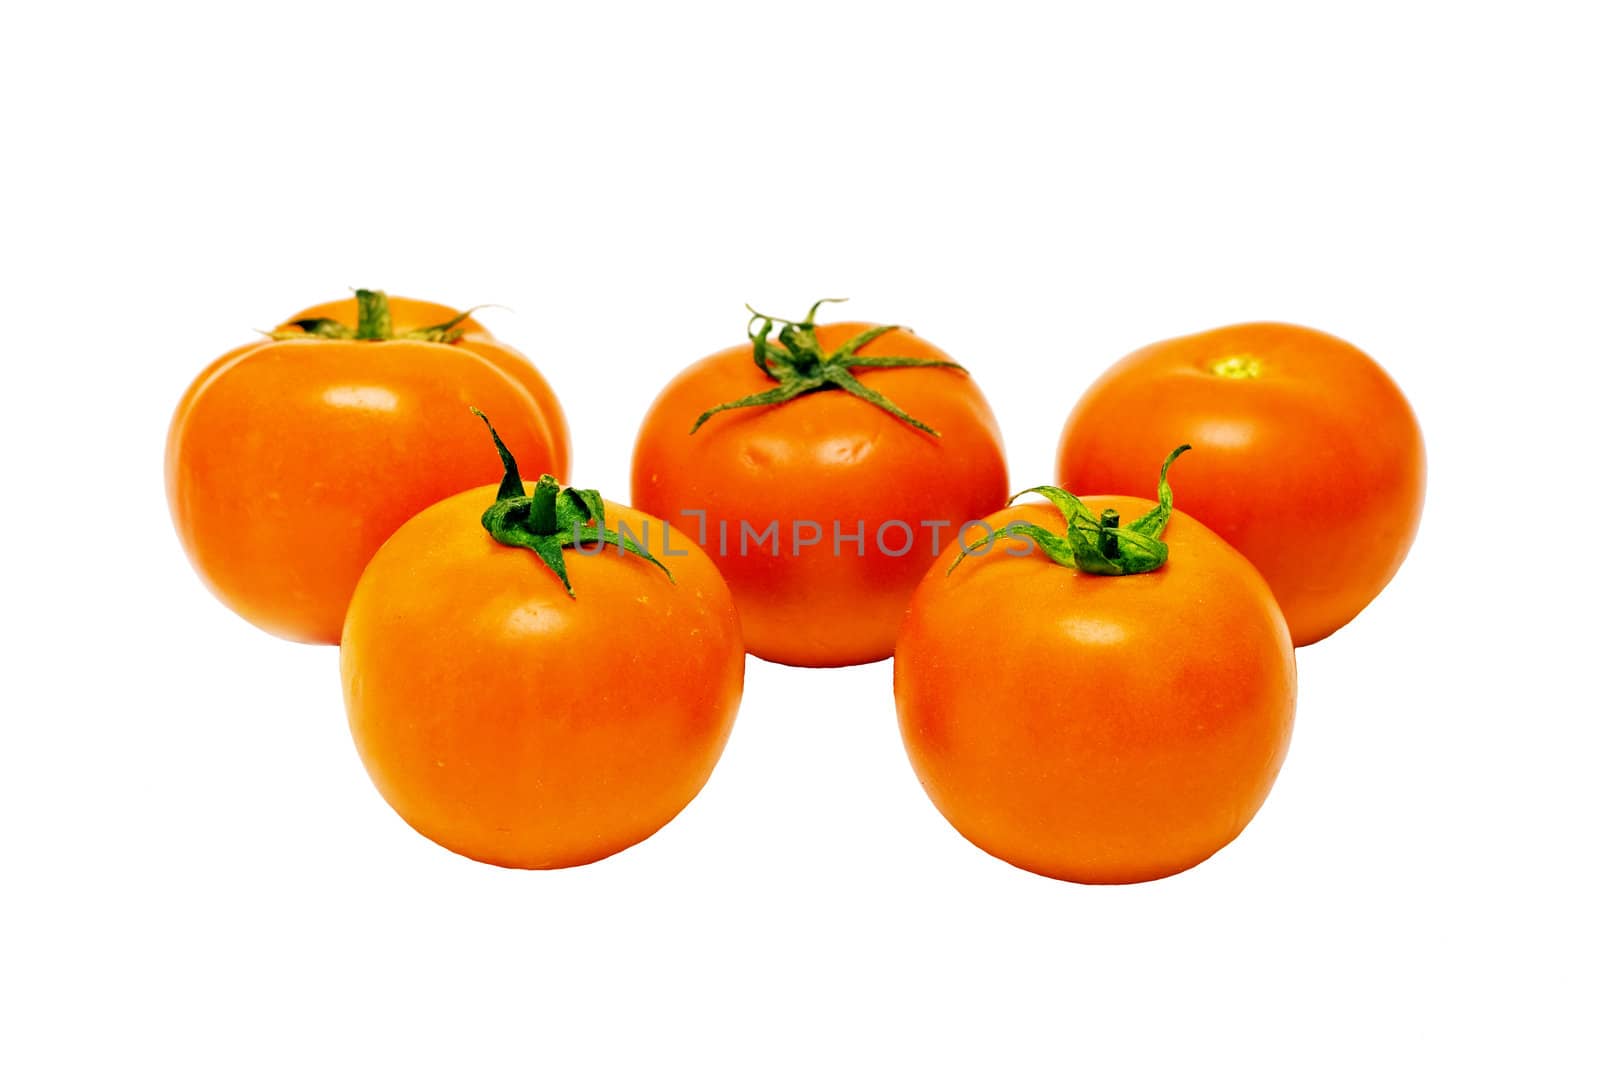   Tomatoes by schankz